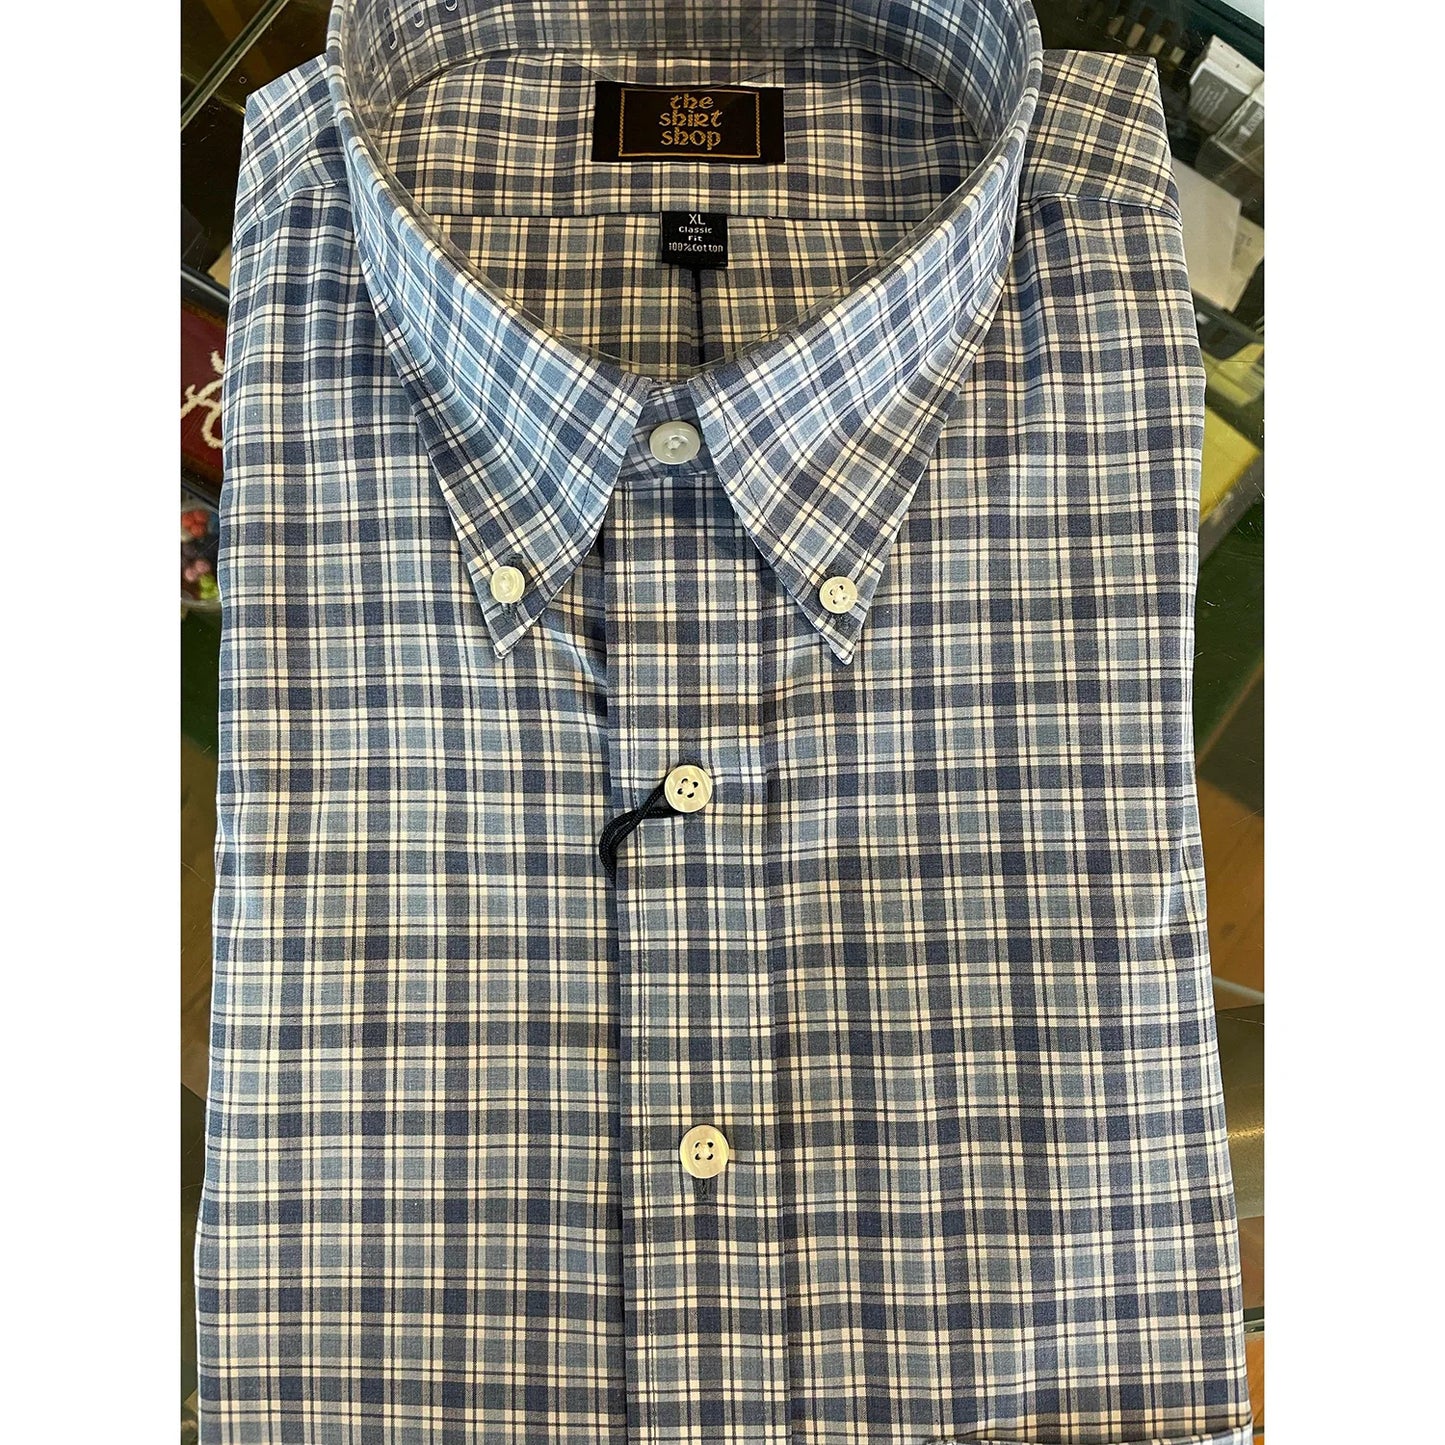 Shirt Shop Button Down - Marco Blue and White Button Down